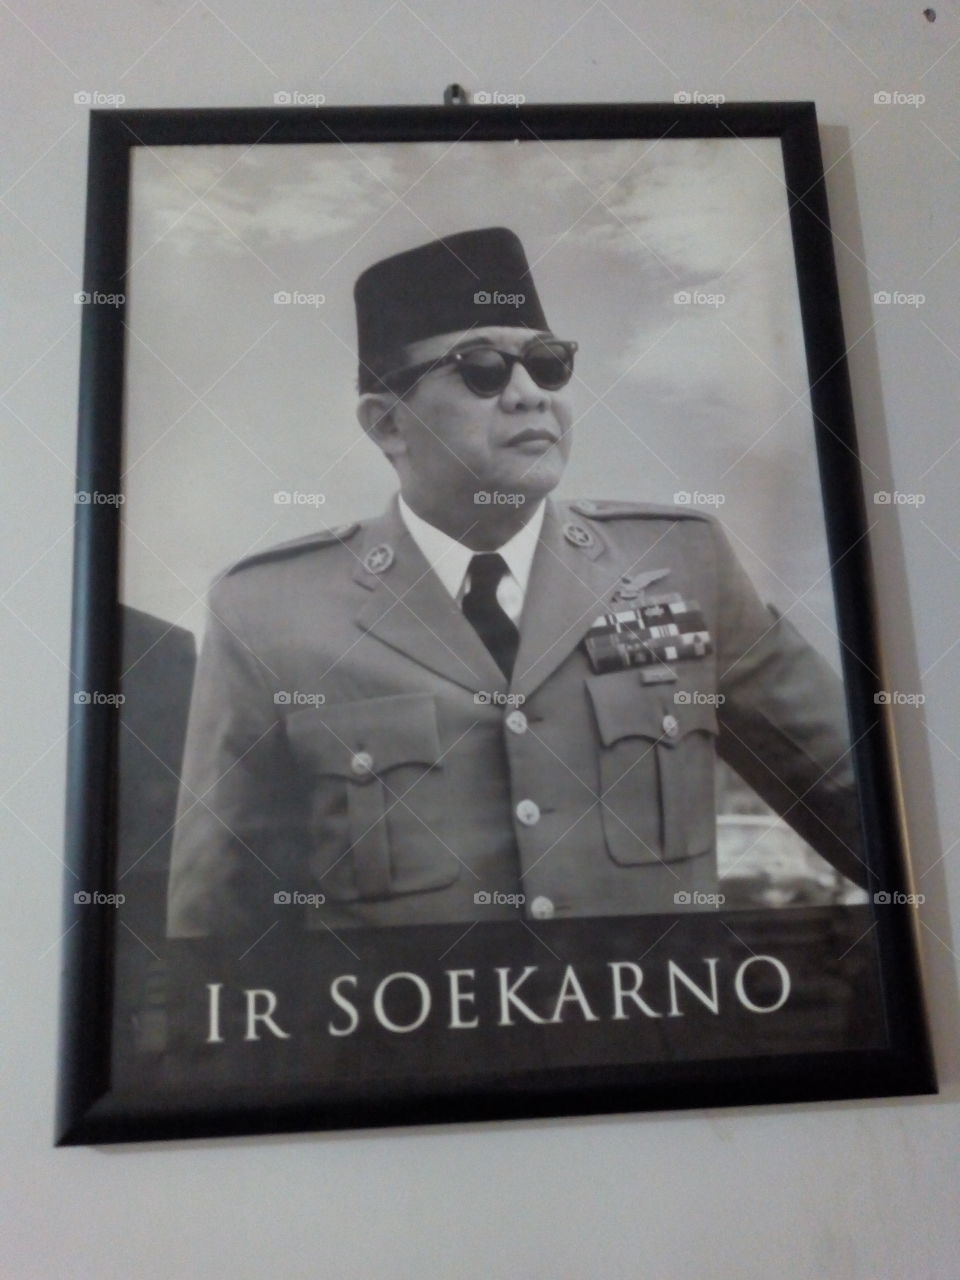 Mr. Soekarno, Indonesia's first president